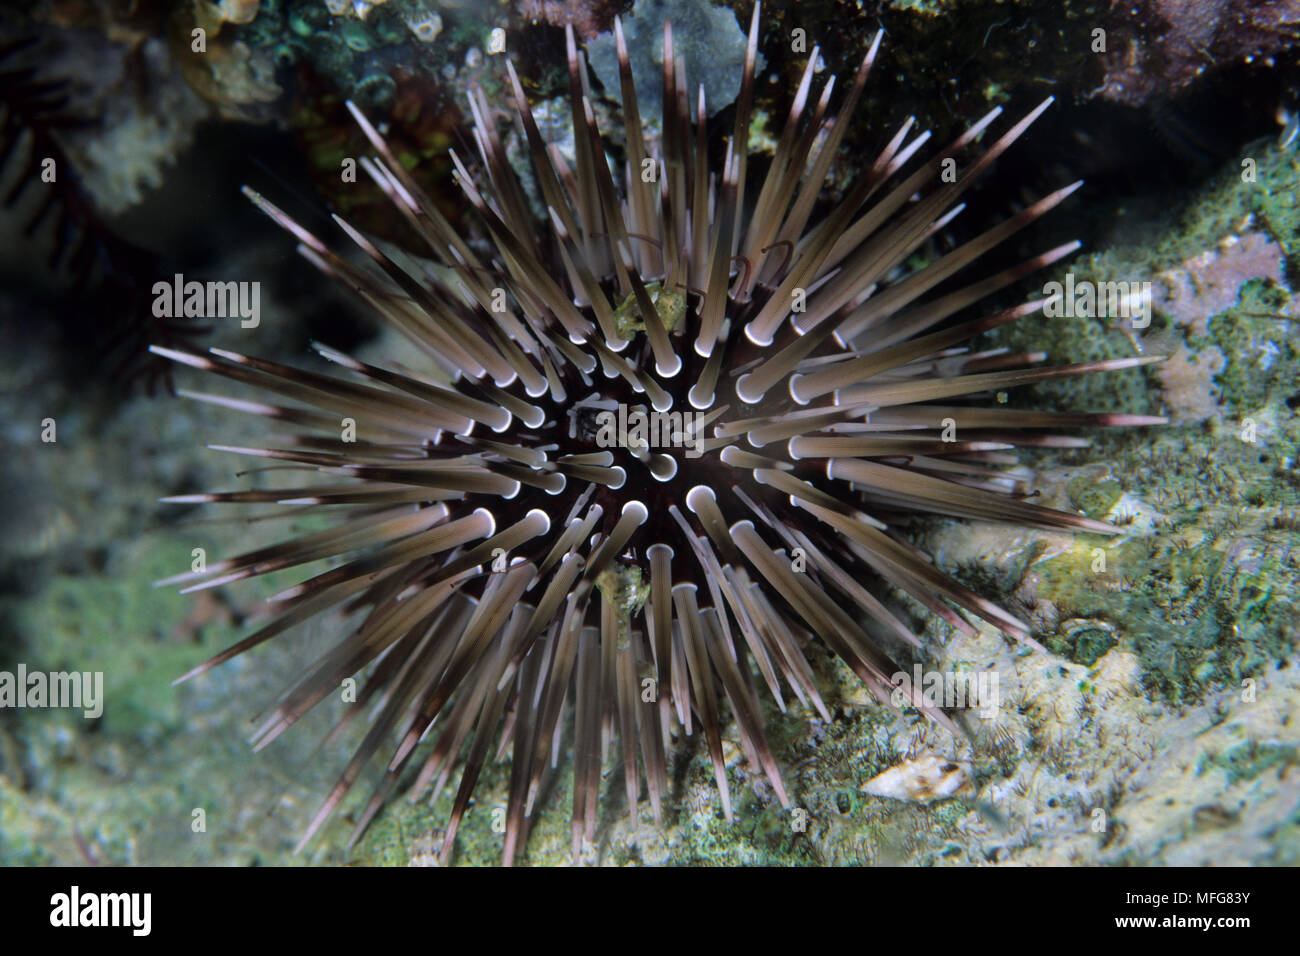 Sea urchin, Echinometra mathaei, Komodo archipelago islands, Komodo National Park, Indonesia, Pacific Ocean  Date: 23.07.08  Ref: ZB777 117122 0061  C Stock Photo